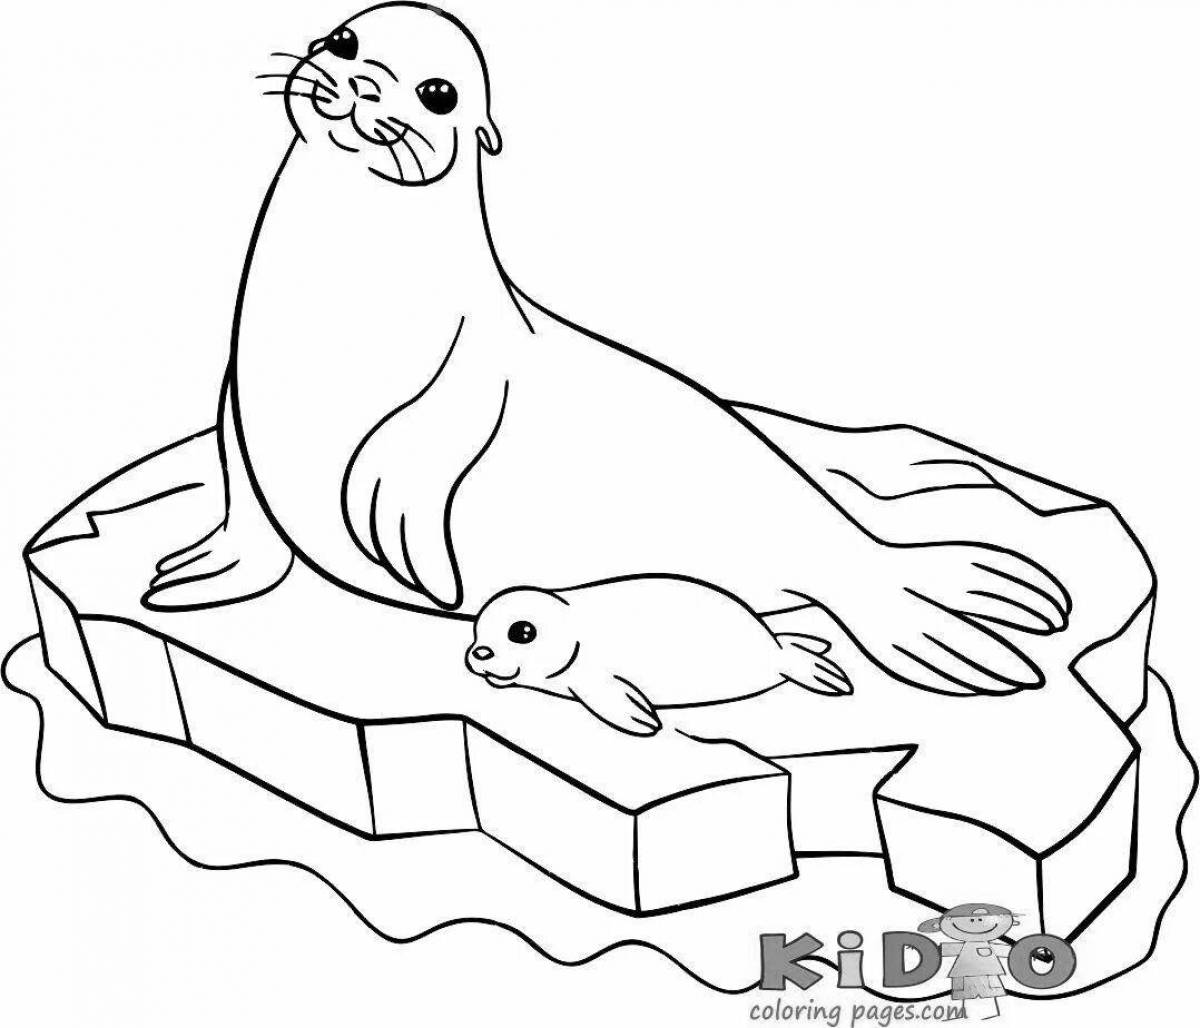 Adorable Baikal seal coloring book for kids